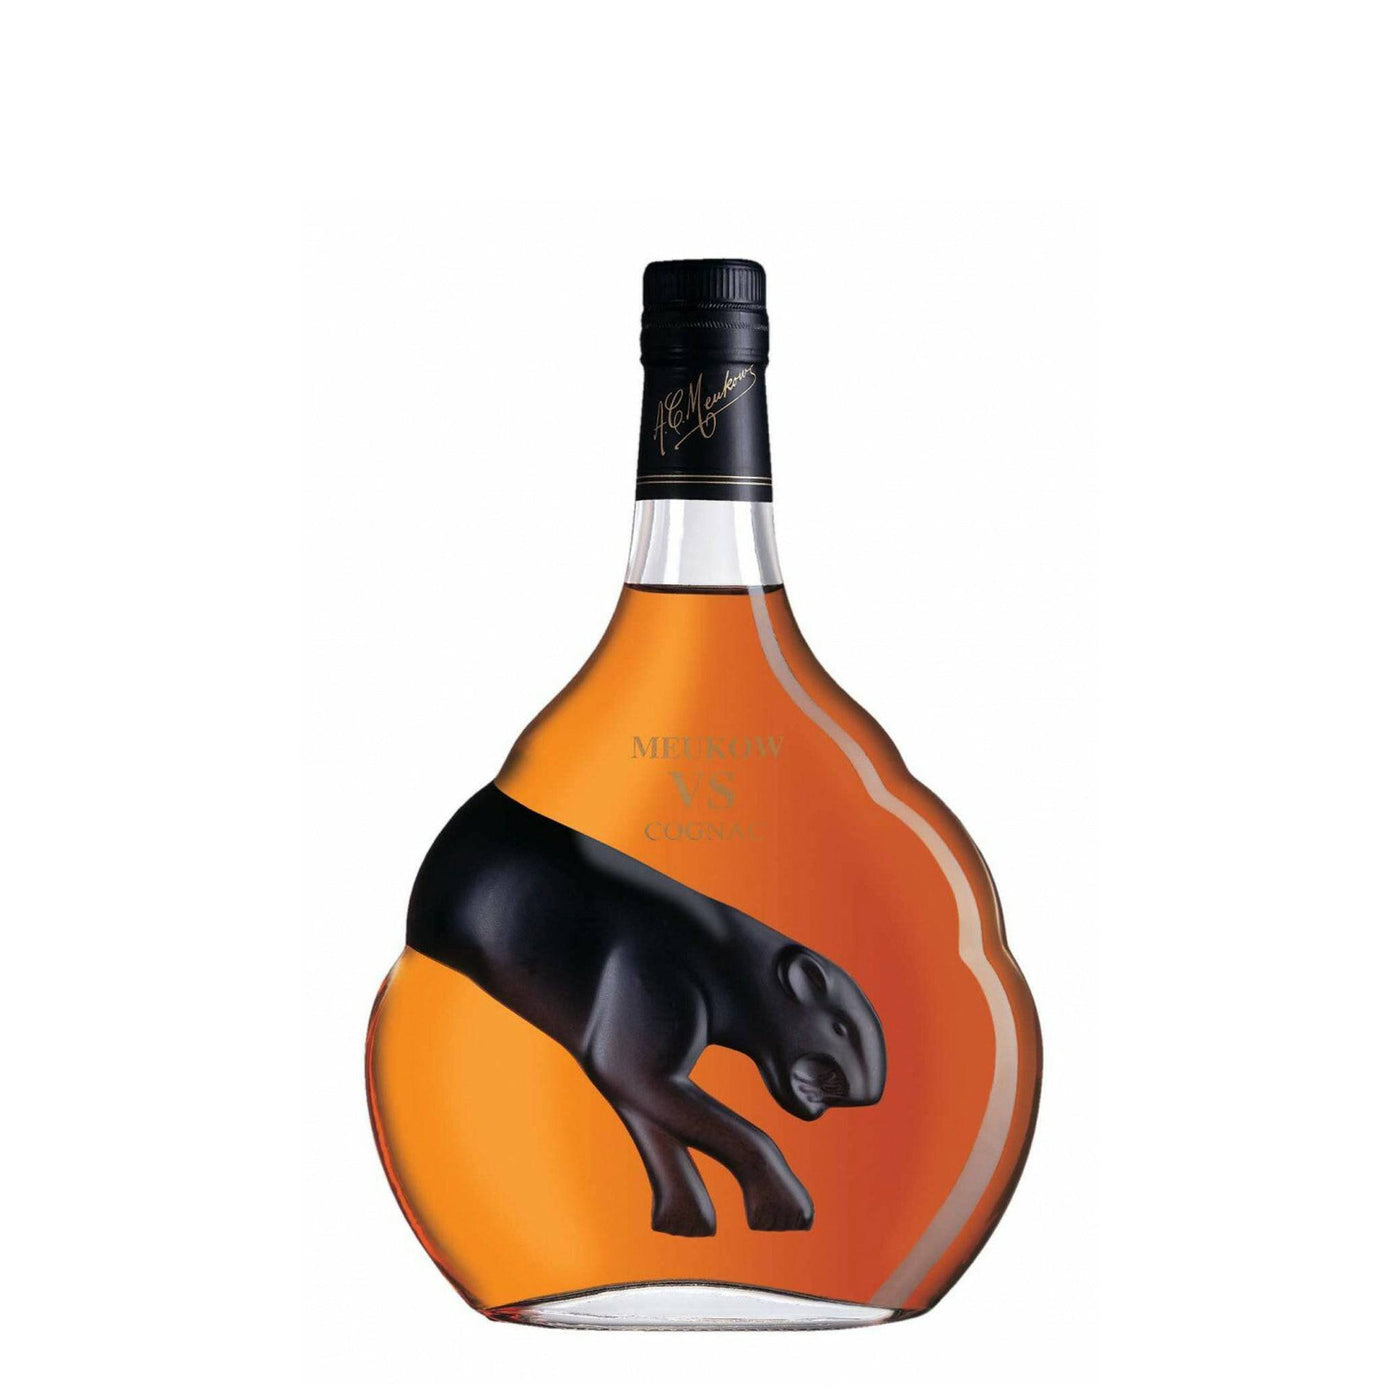 Meukow VS Cognac - Spiritly